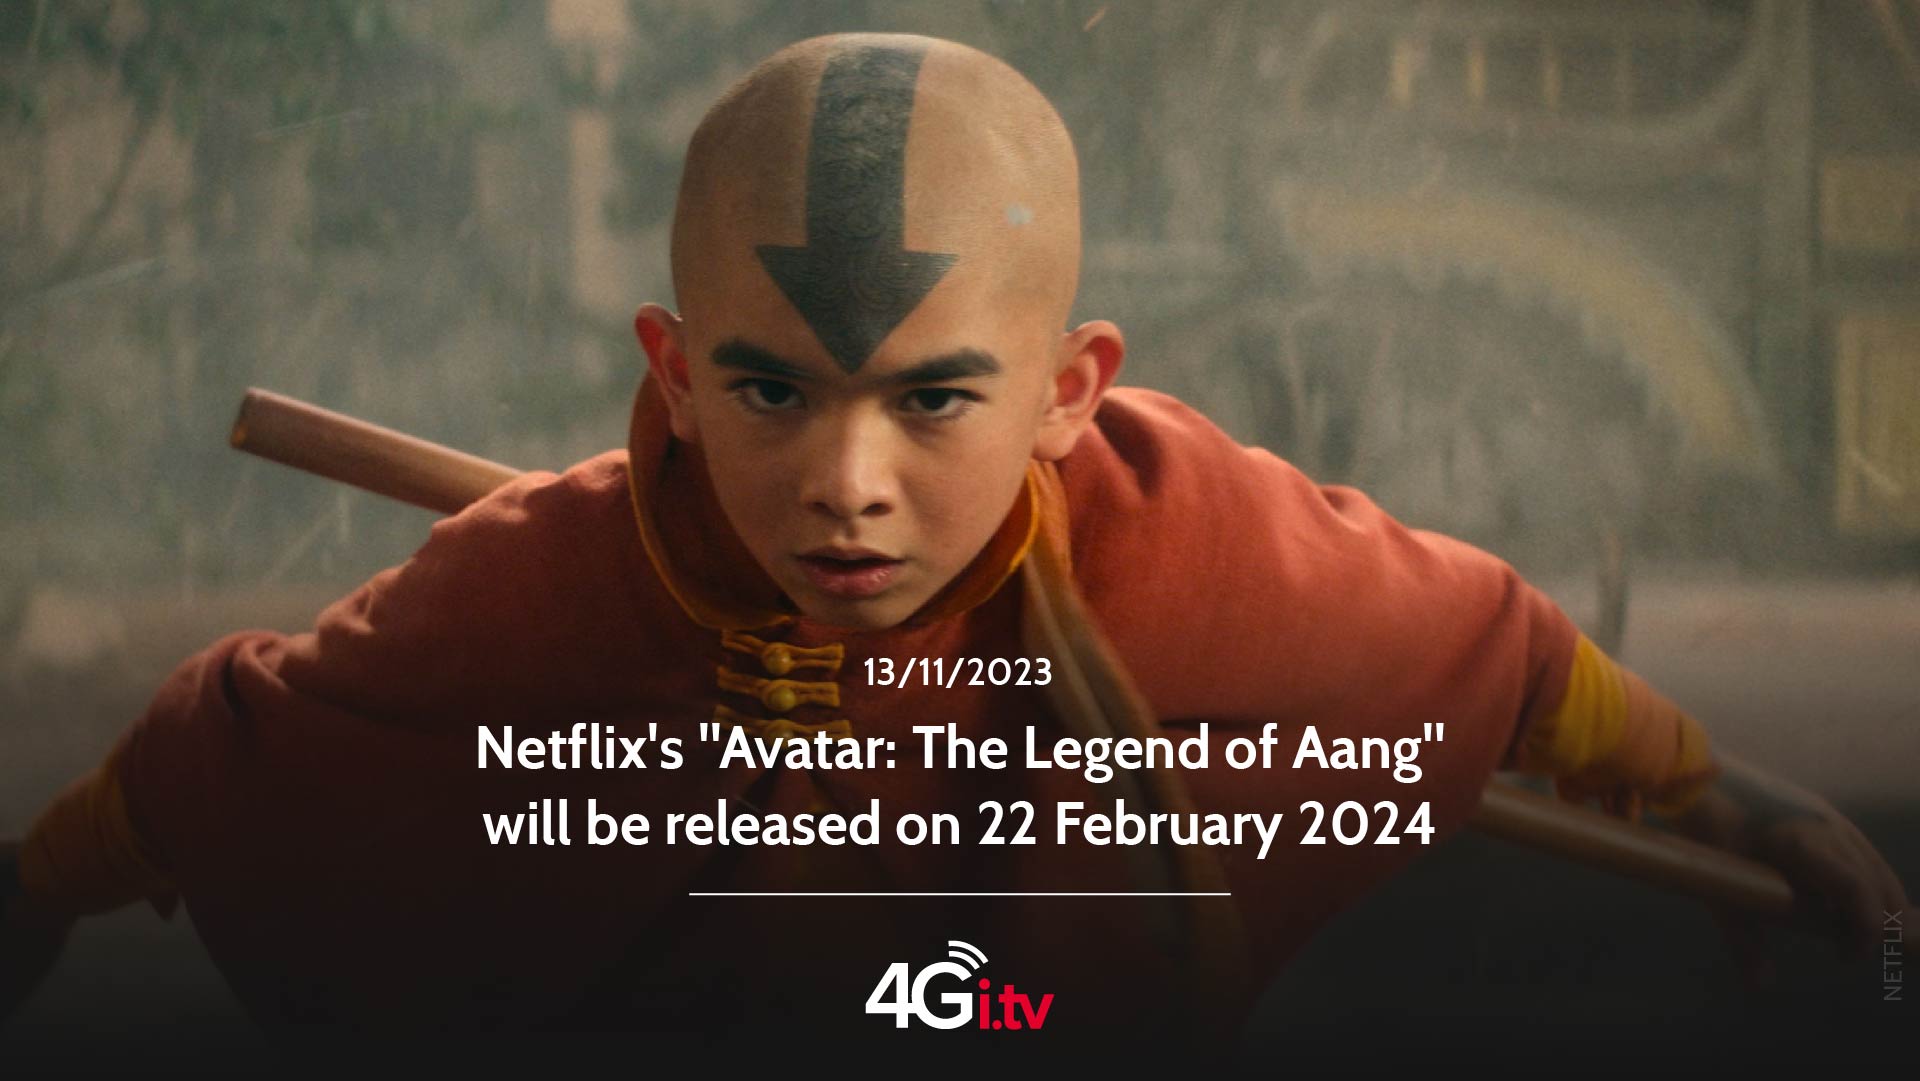 Lesen Sie mehr über den Artikel “Netflix’s “Avatar: The Legend of Aang” will be released on 22 February 2024